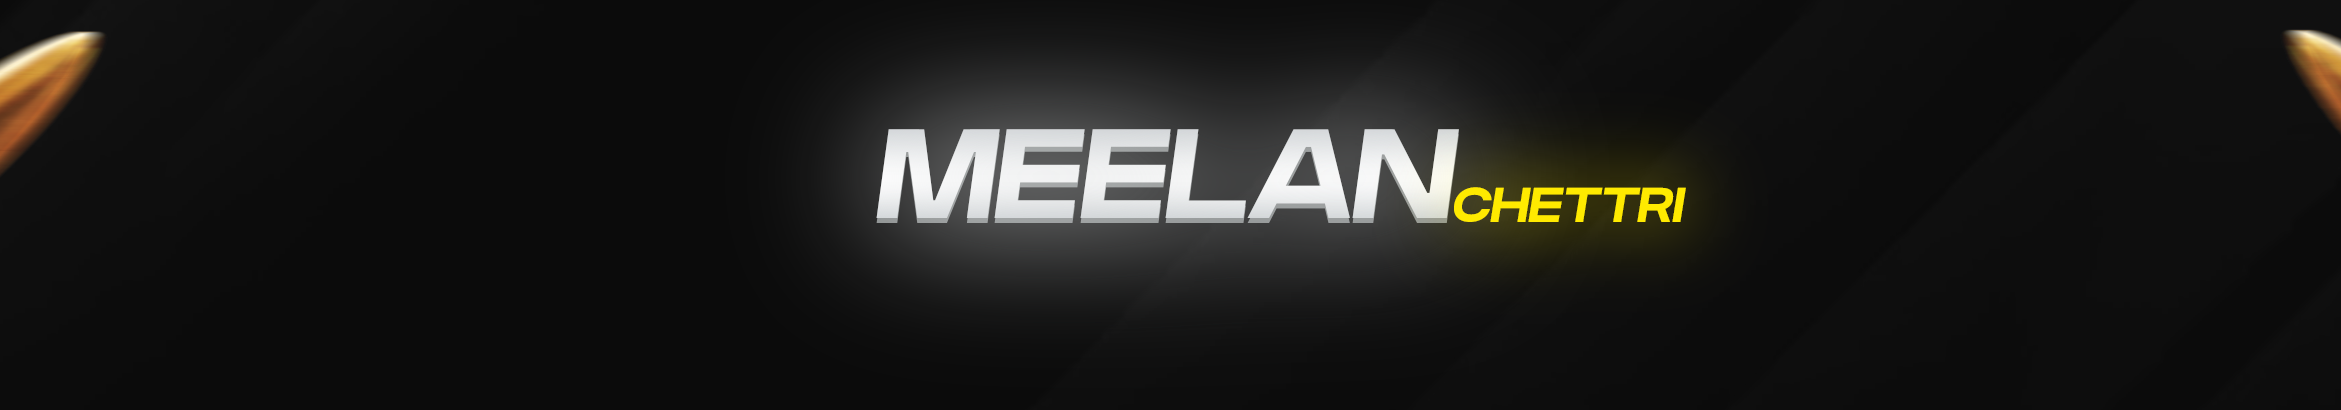 Meelan Chettri's profile banner